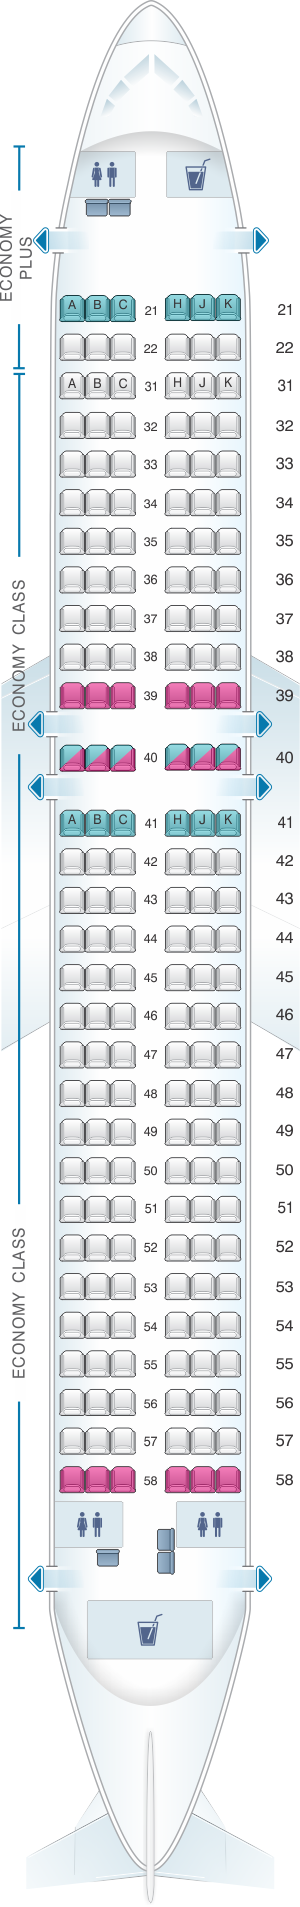 Seat Map Philippine Airlines Airbus A320 200 180PAX | SeatMaestro